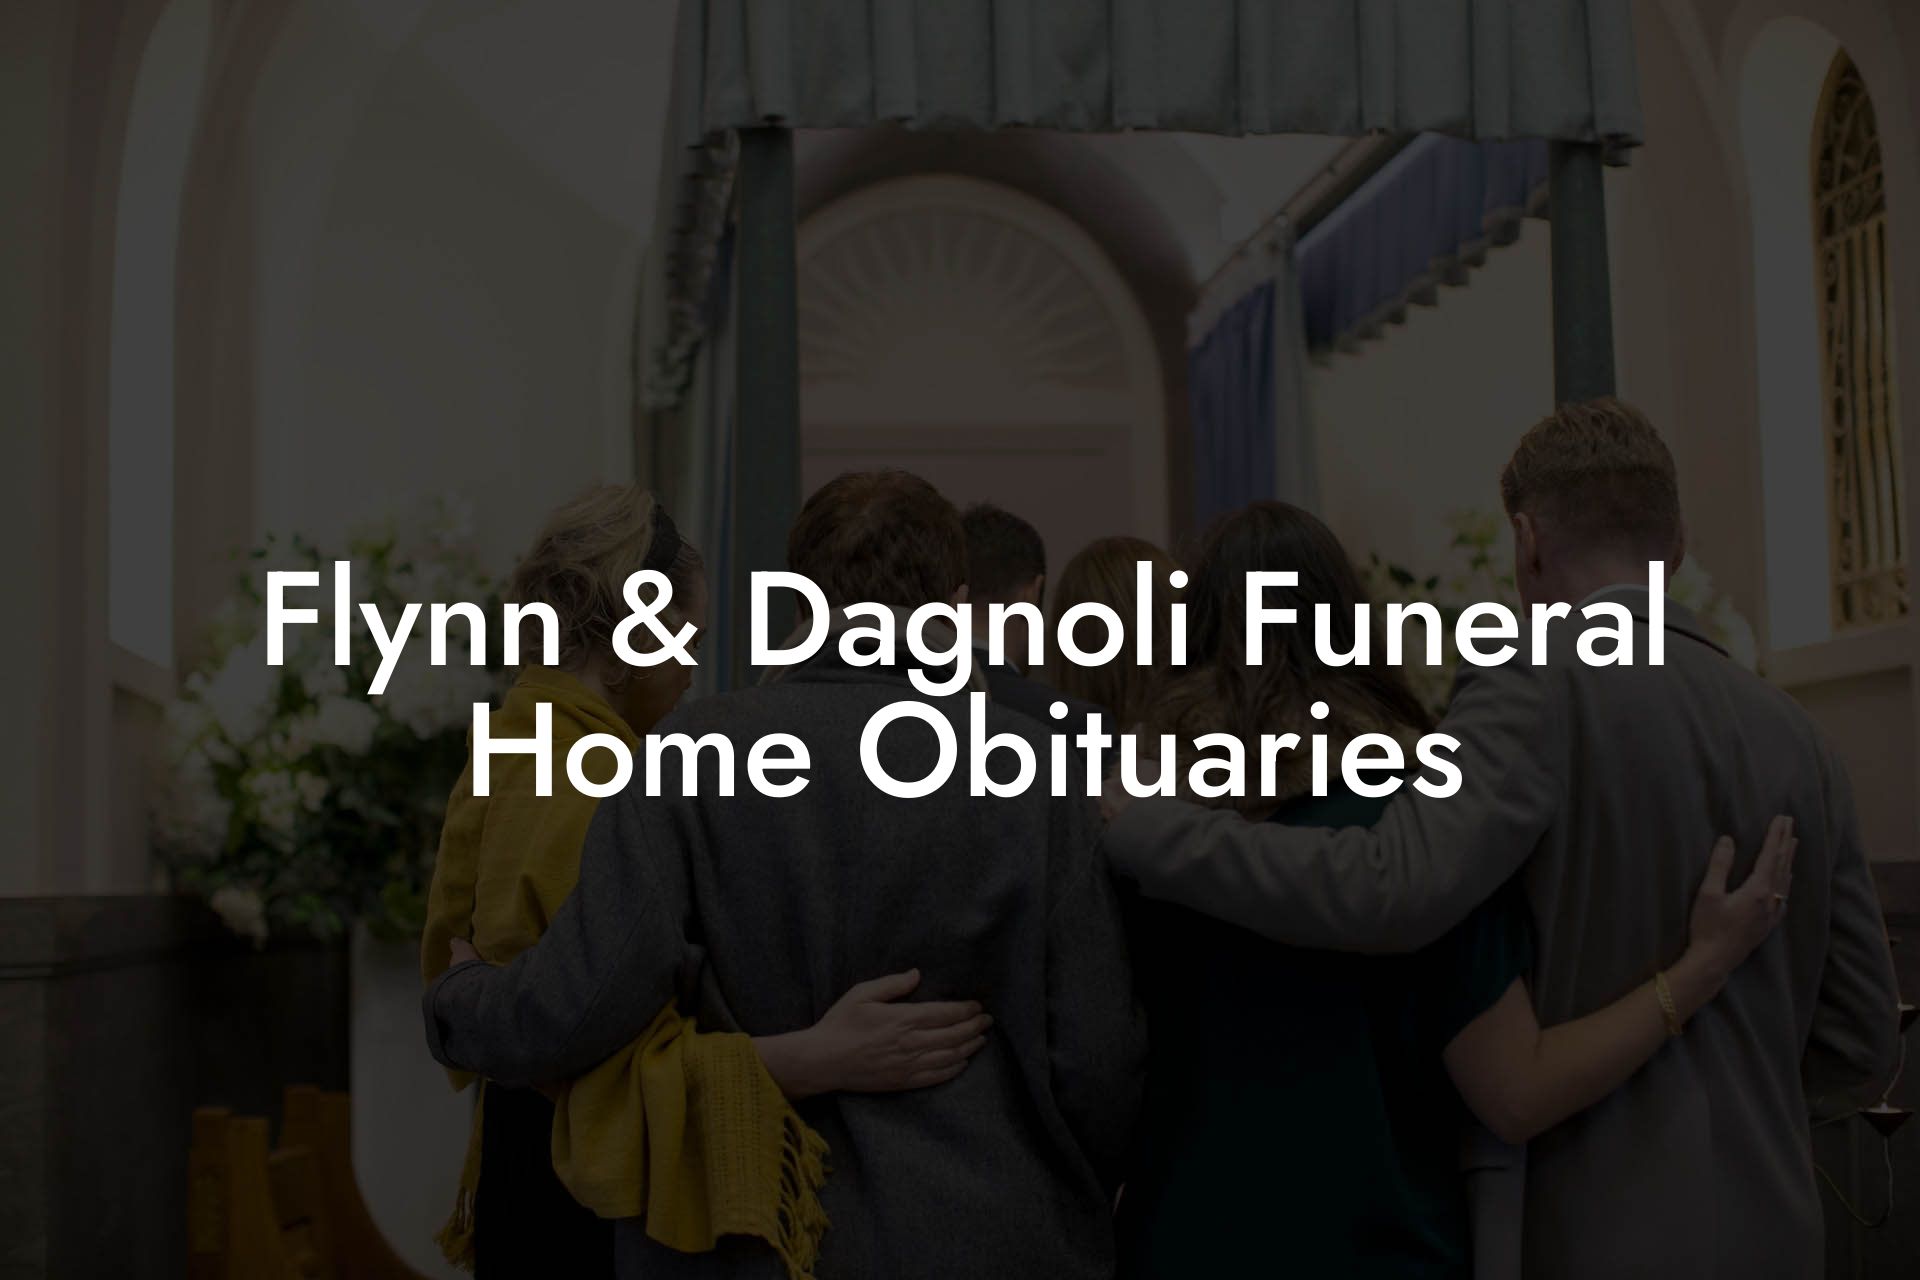 Flynn & Dagnoli Funeral Home Obituaries